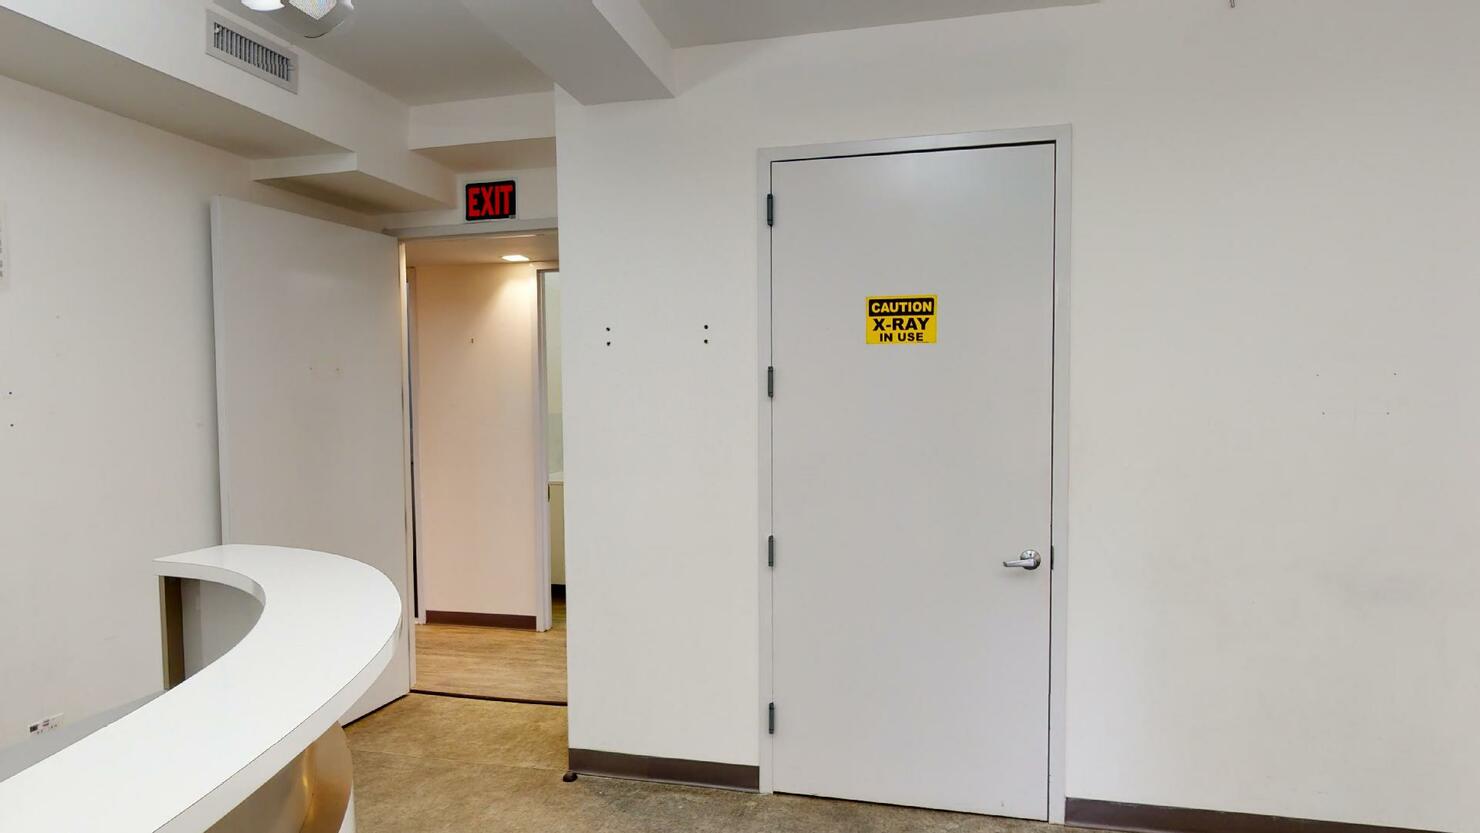 369 Lexington Avenue Office Space - Radiology room